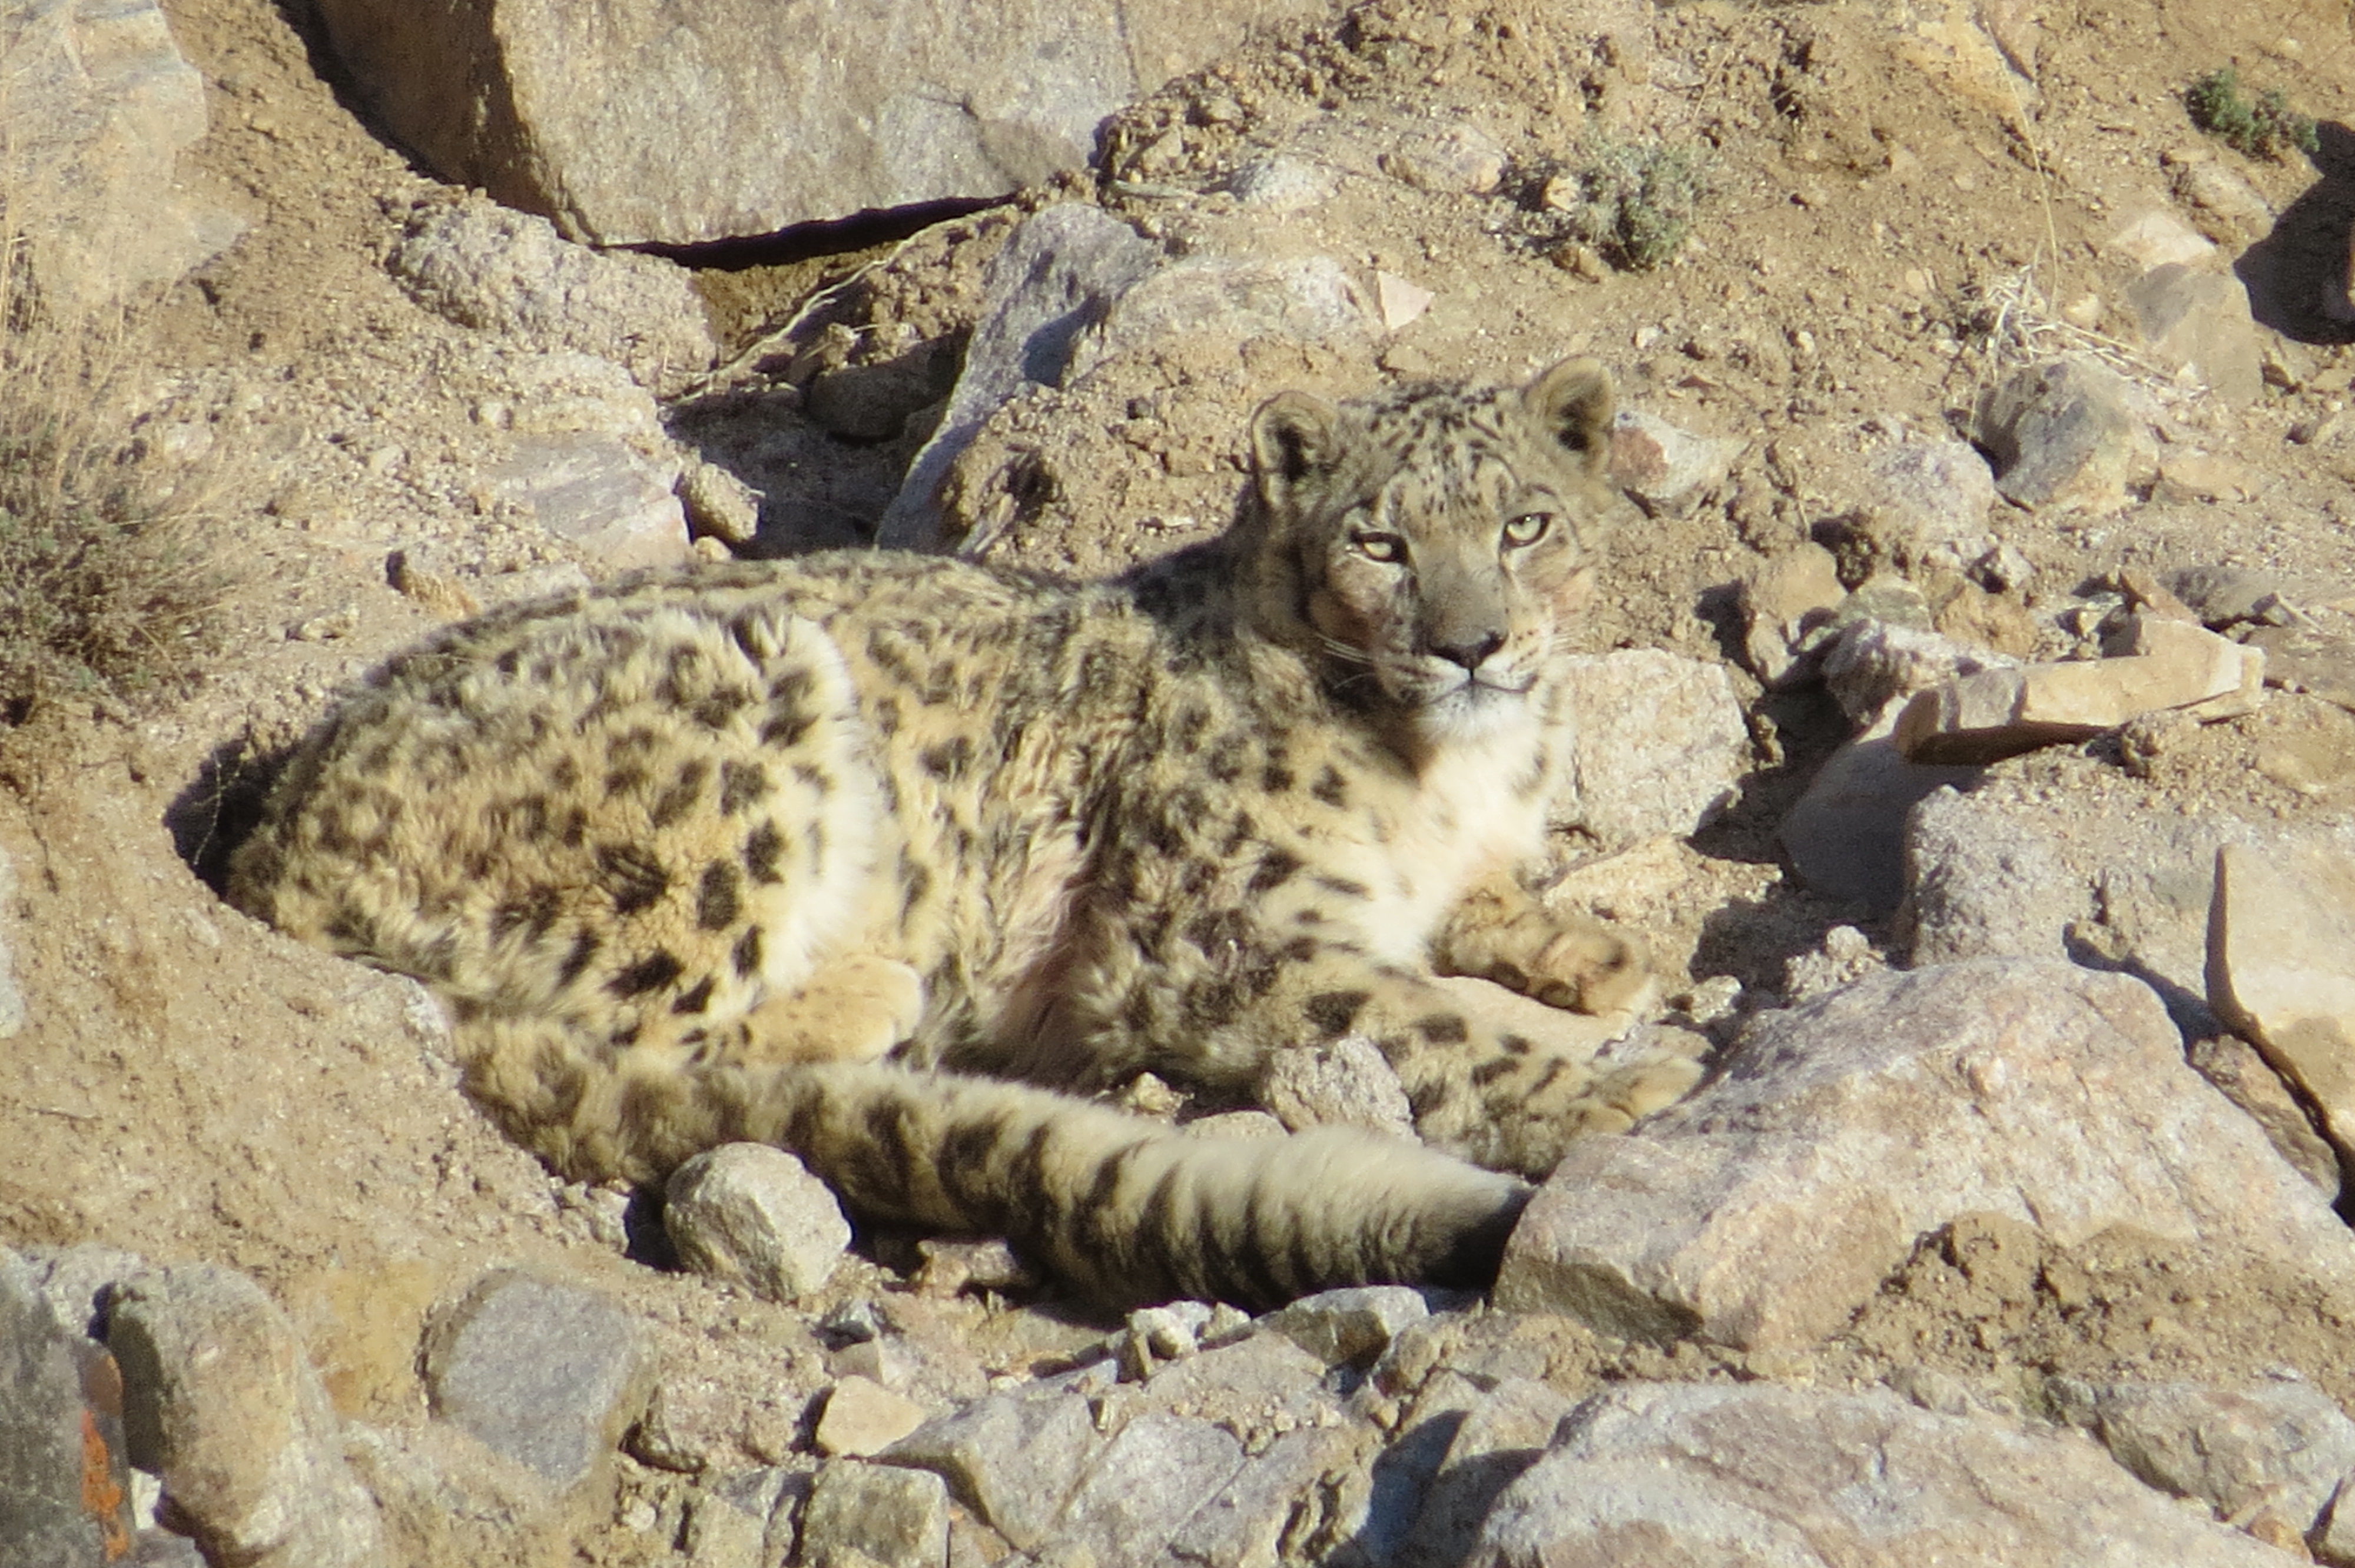 Picture courtesy Snow Leopard Lodge, Ulley, Ladakh